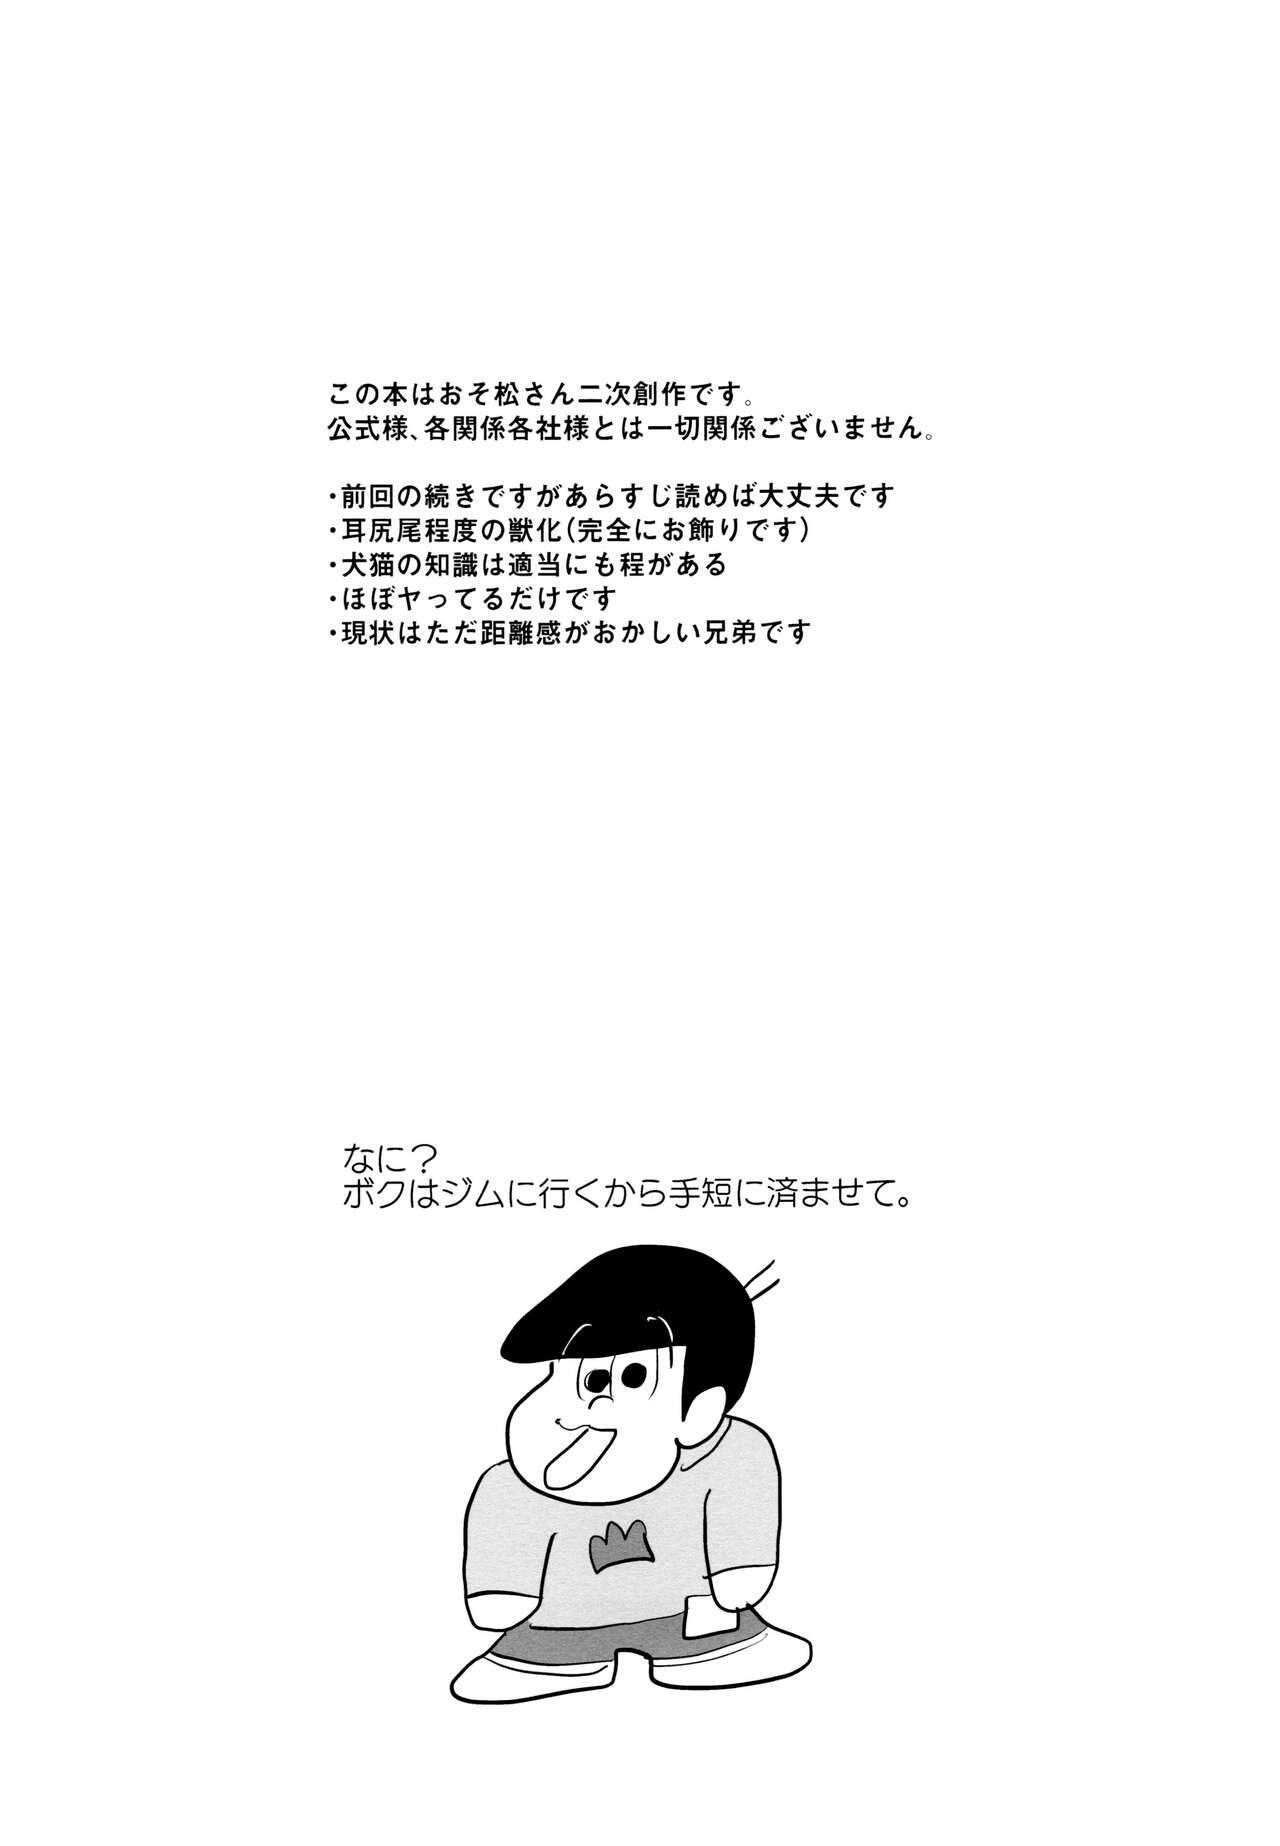 Gaycum jacobson error2 - Osomatsu-san Reverse - Page 2